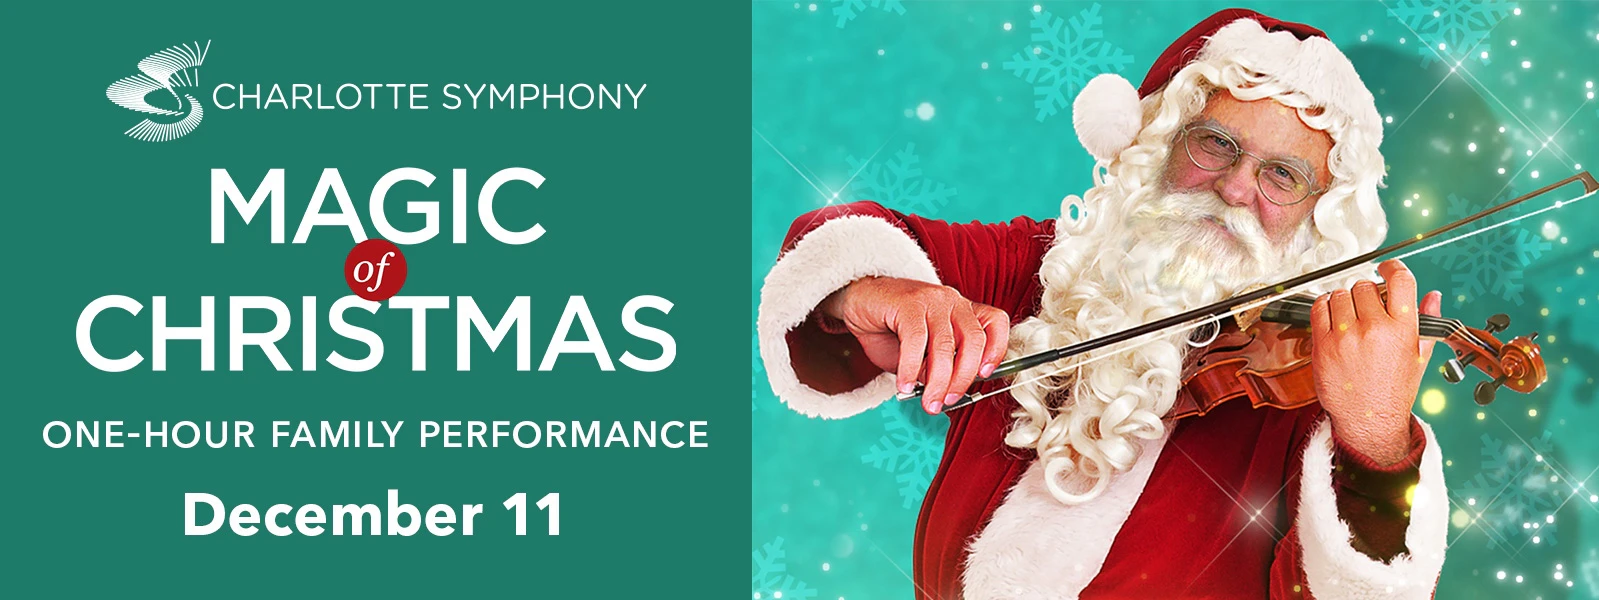 Charlotte Symphony's Magic of Christmas